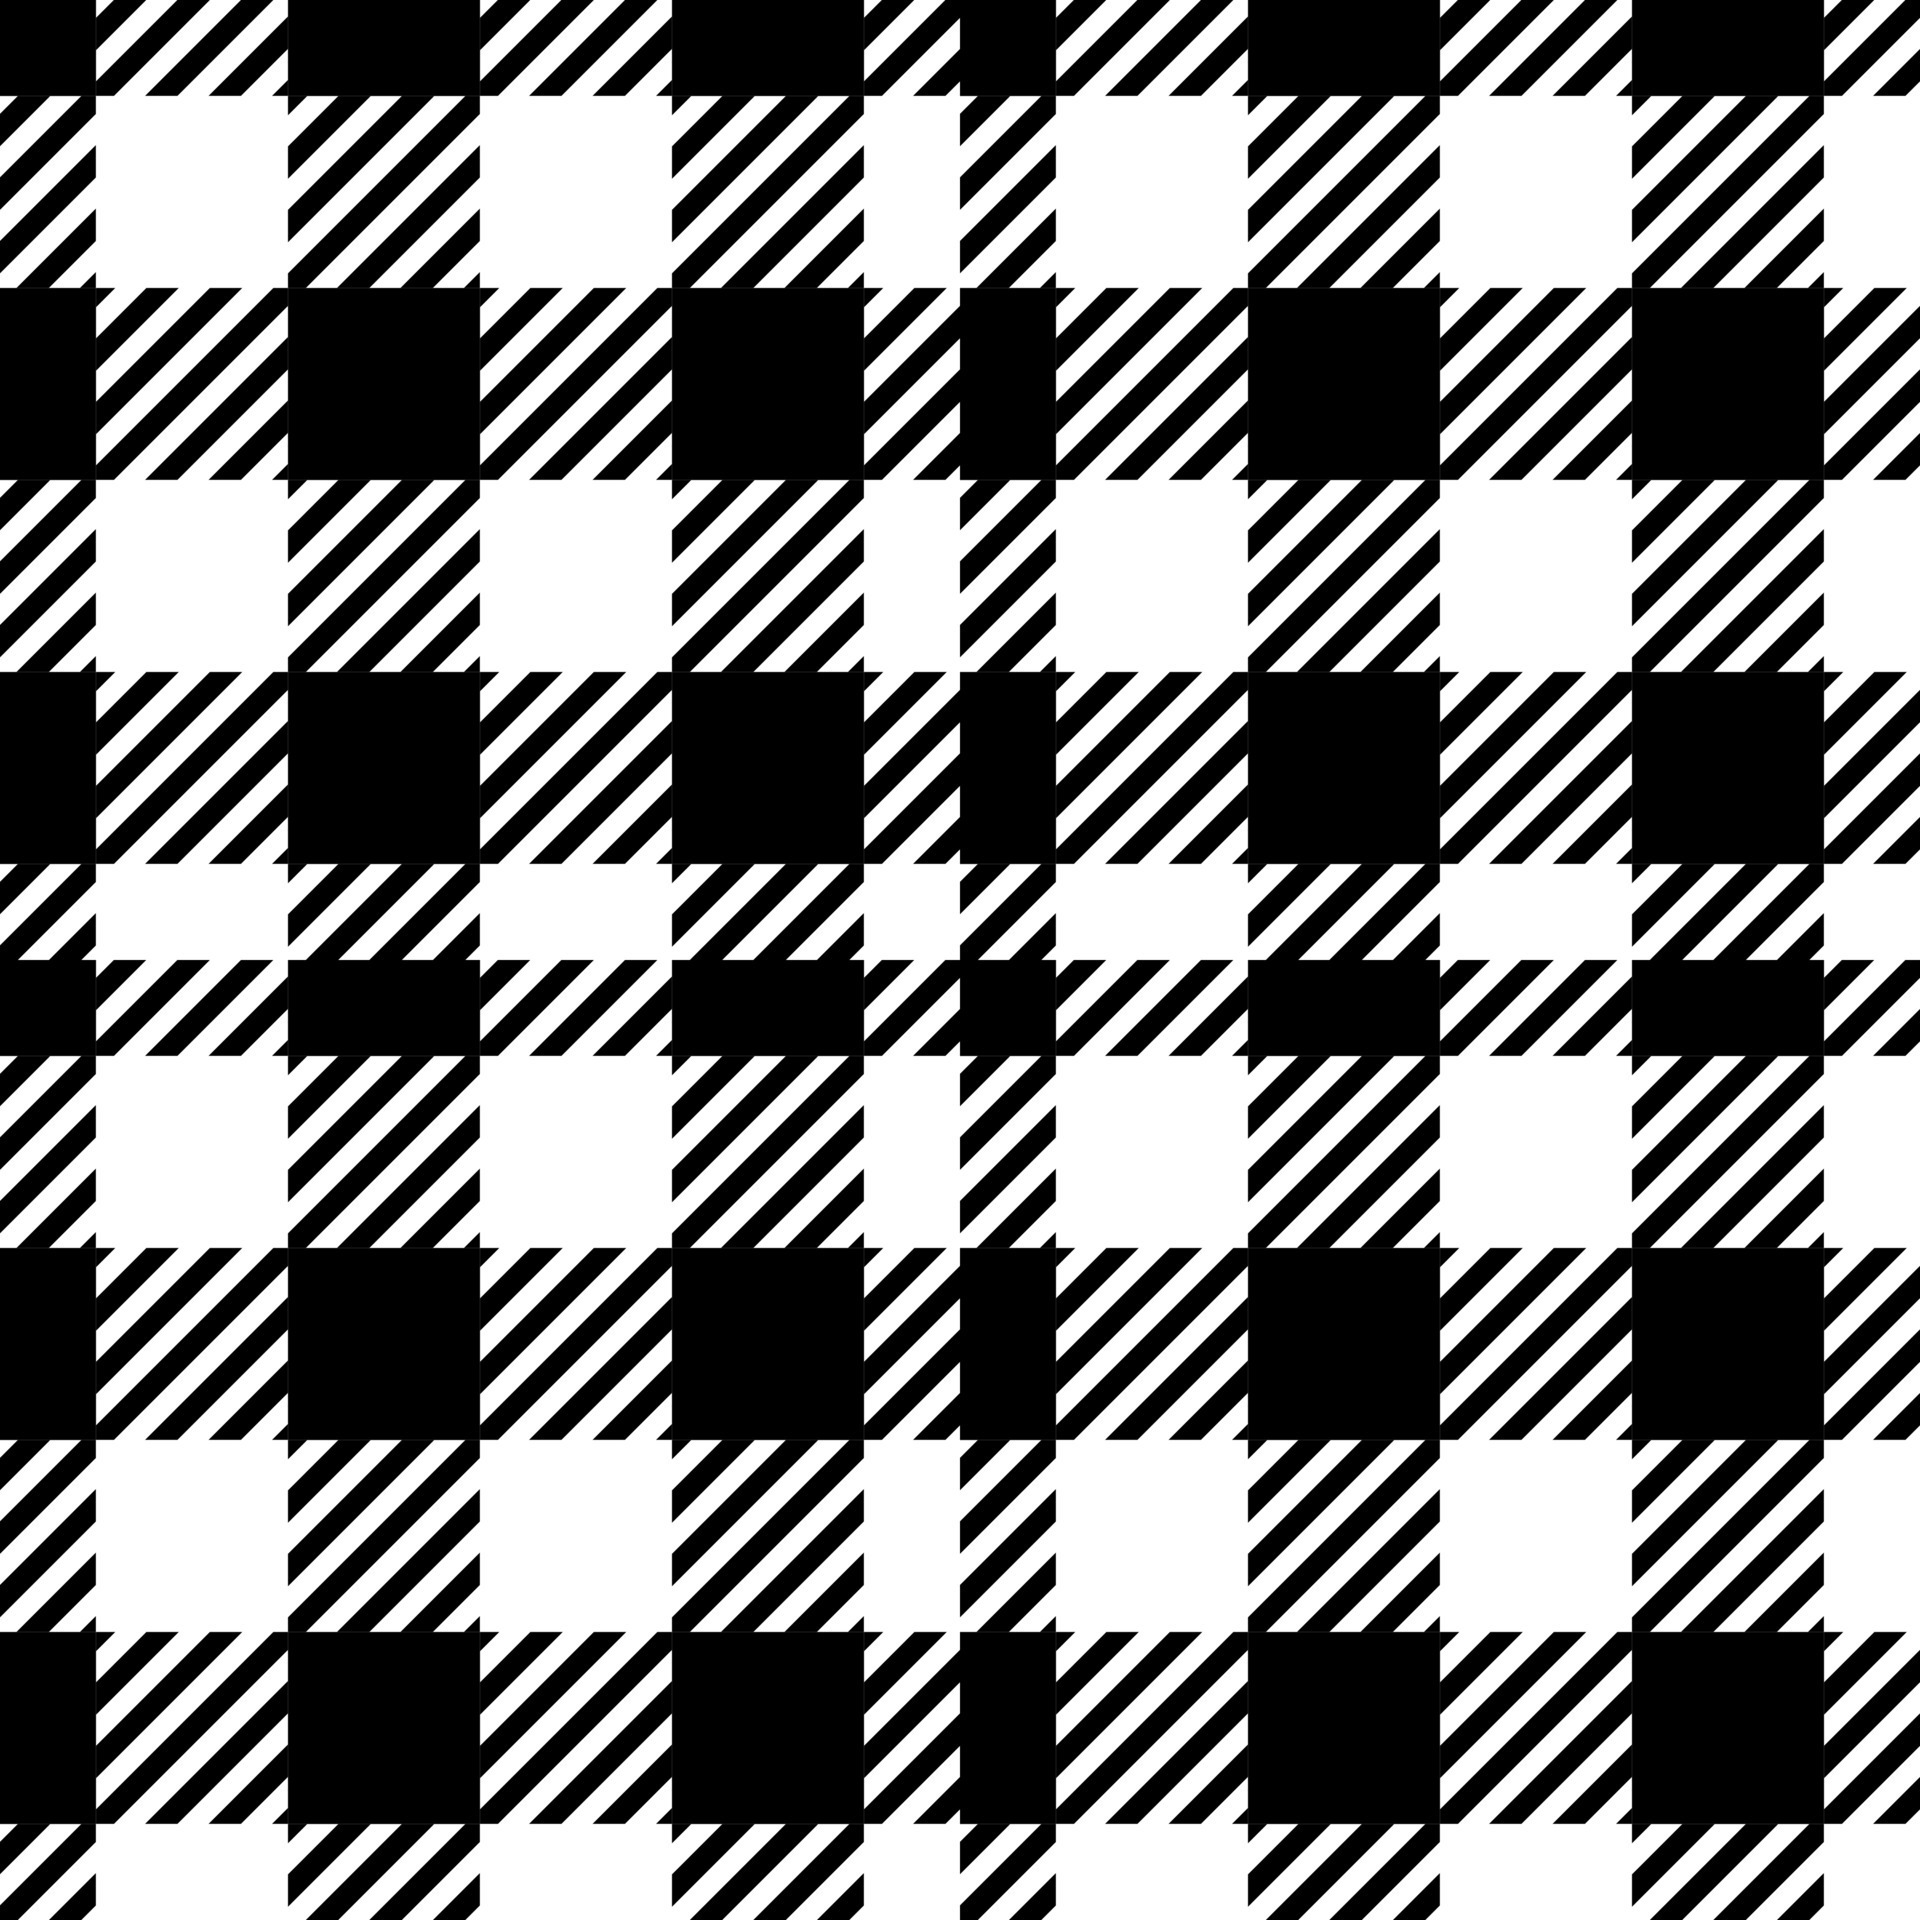 Vetor sem costura xadrez preto e branco